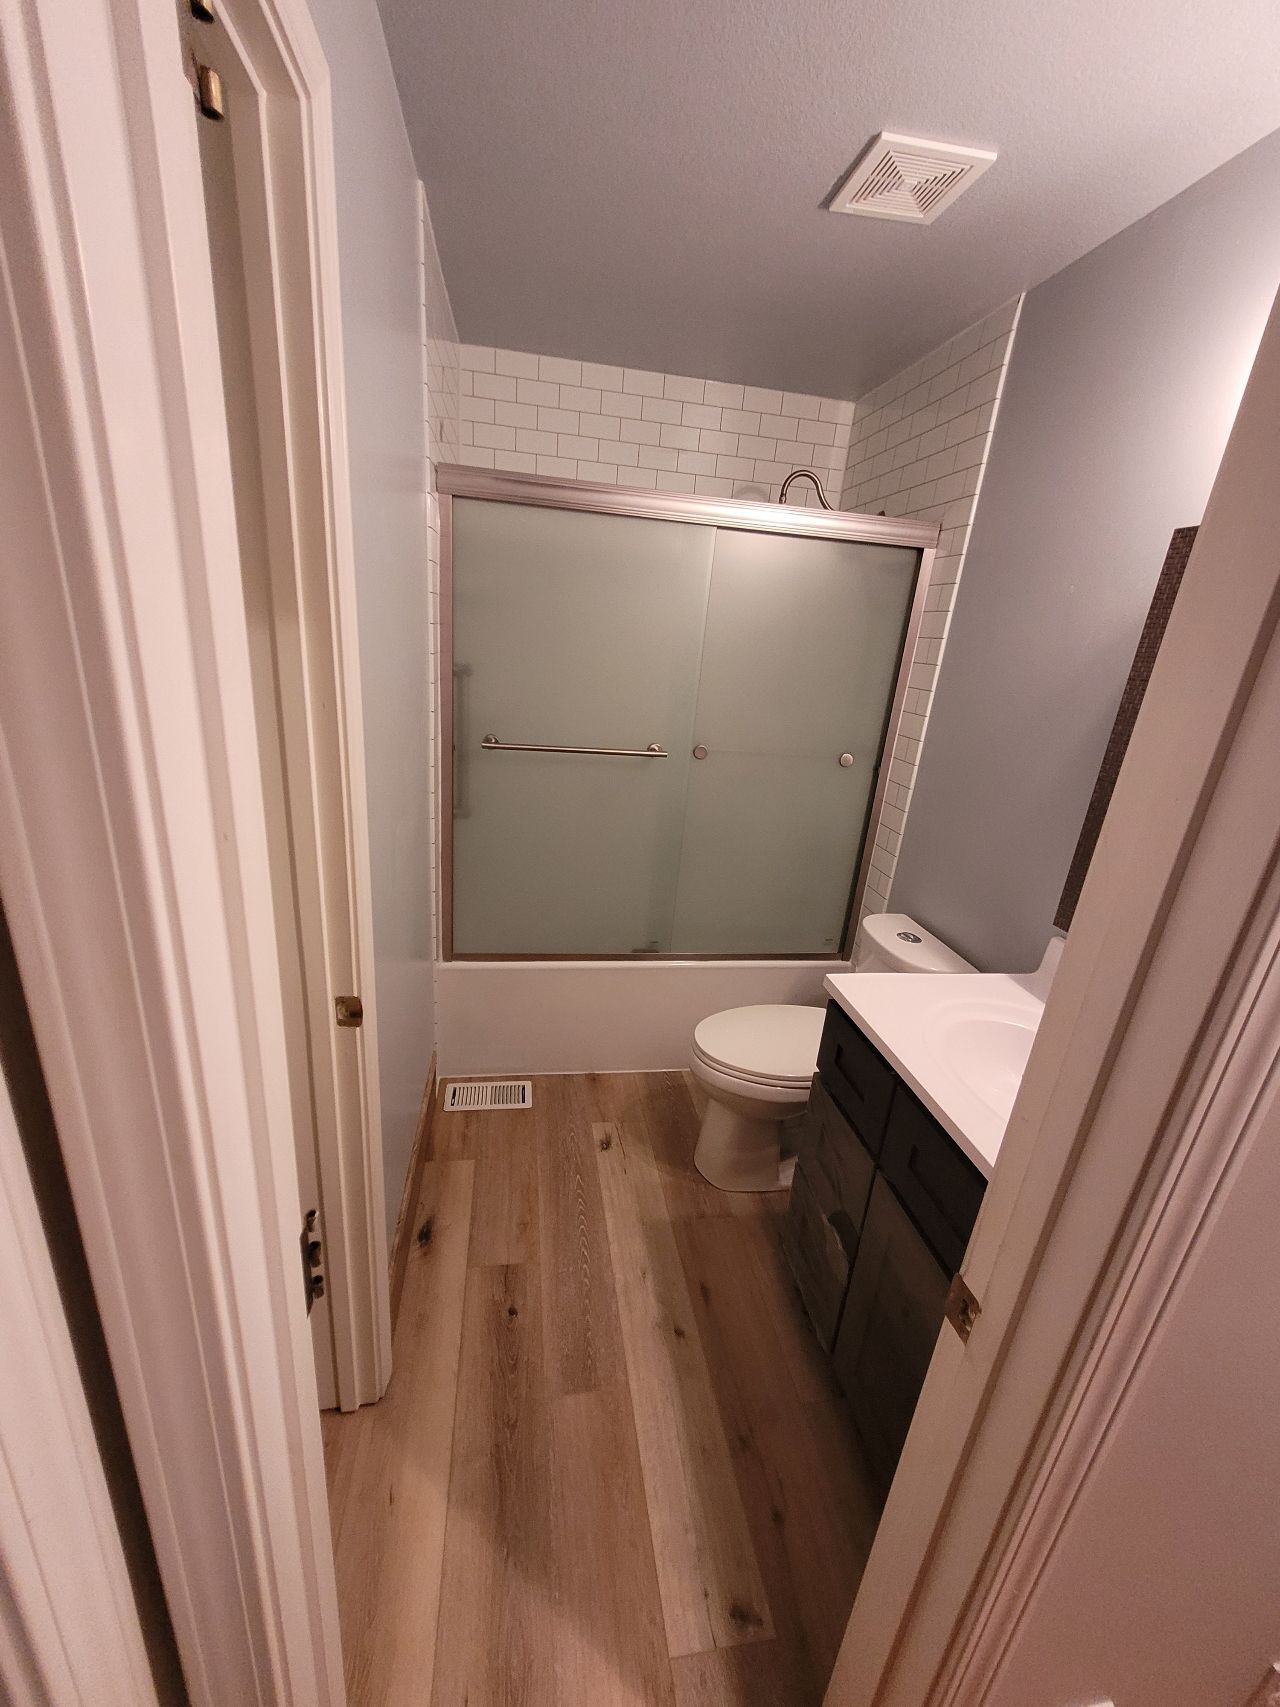 photo of a small bathroom